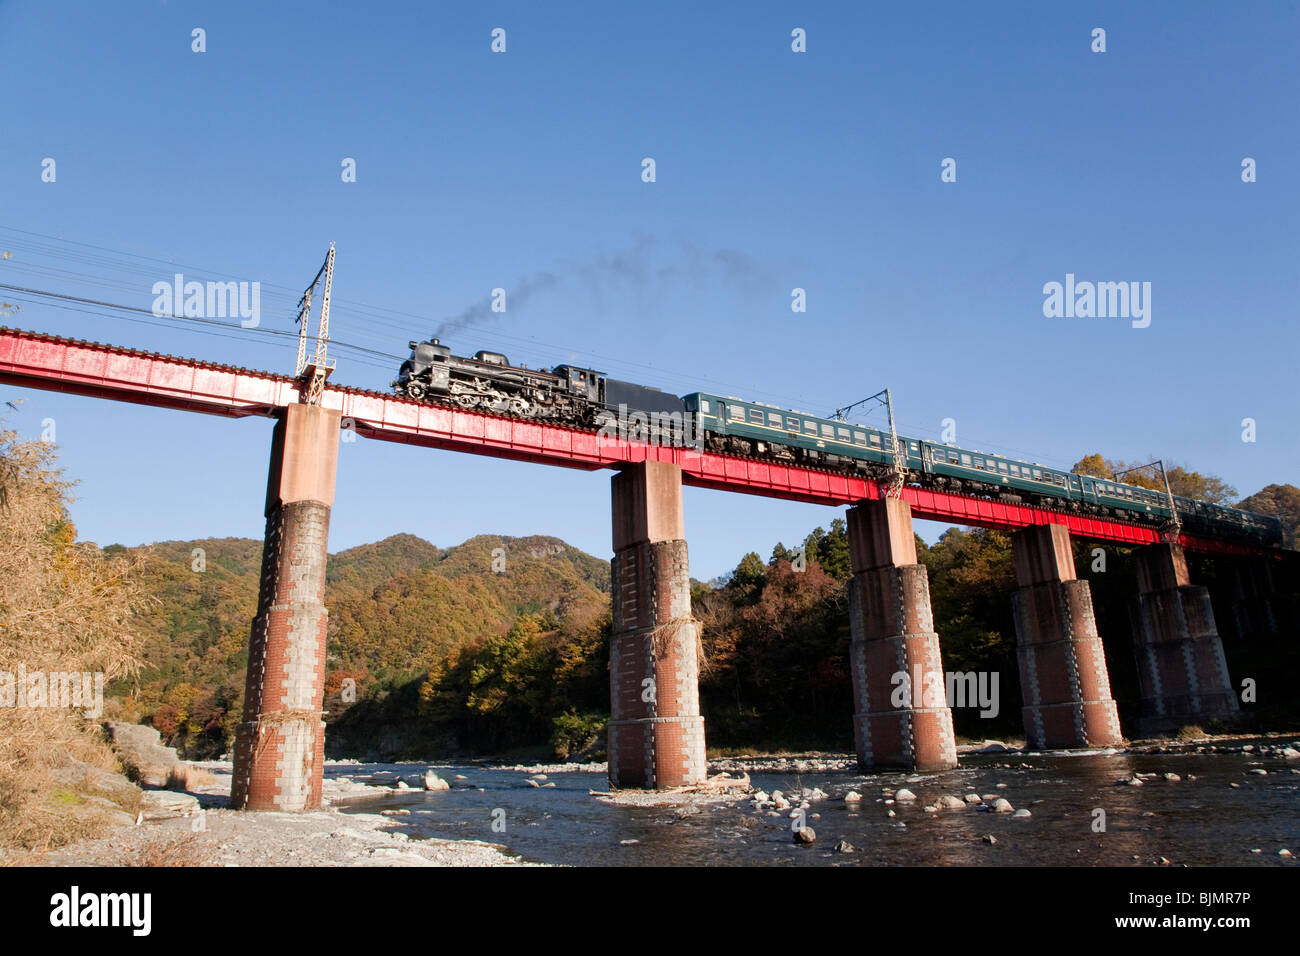 Steam train crossing railway bridge Stock Photo